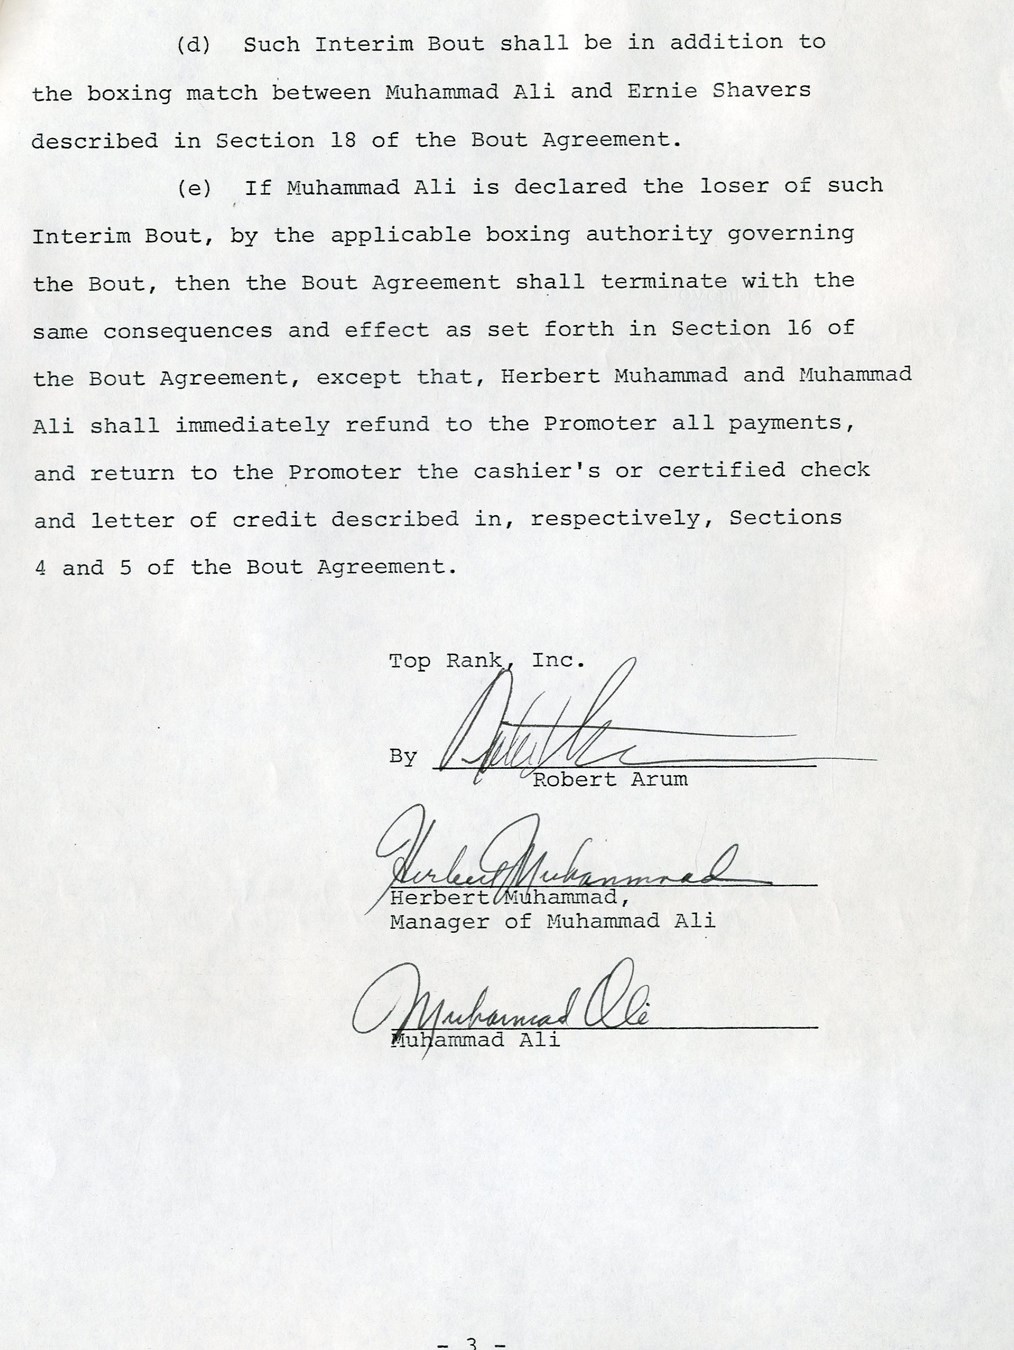 - Muhammad Ali Signed Fight Agreement (1977)